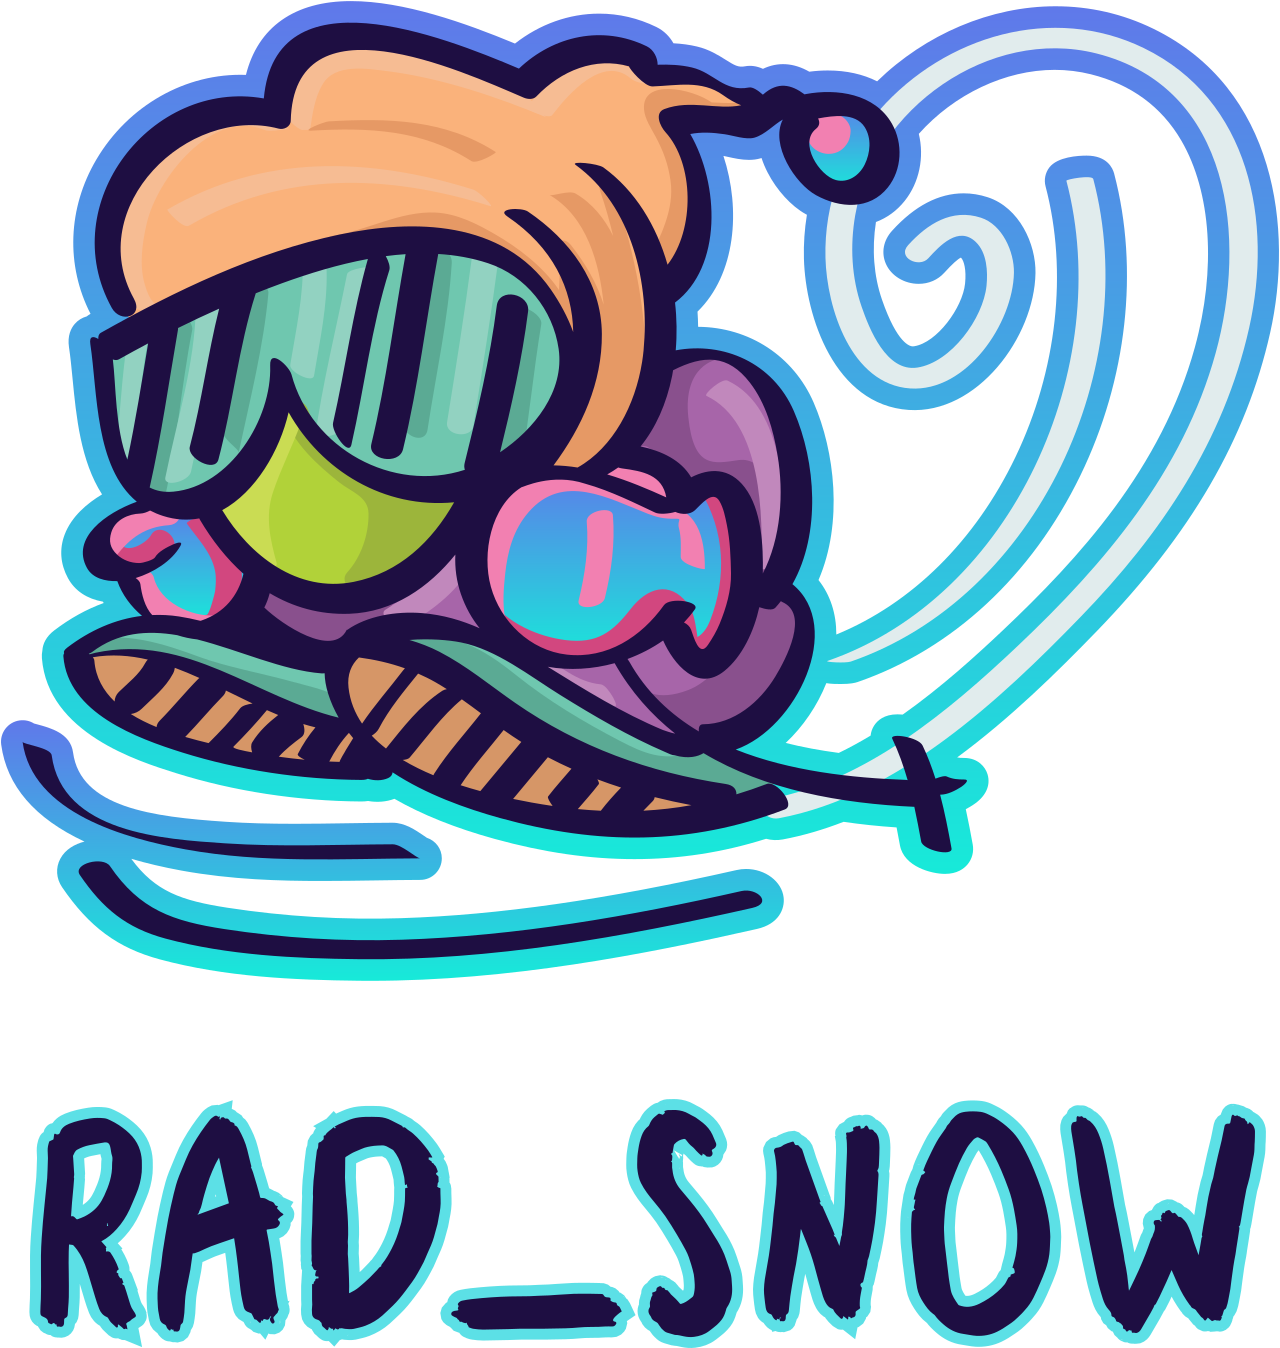 rad_snow's logo